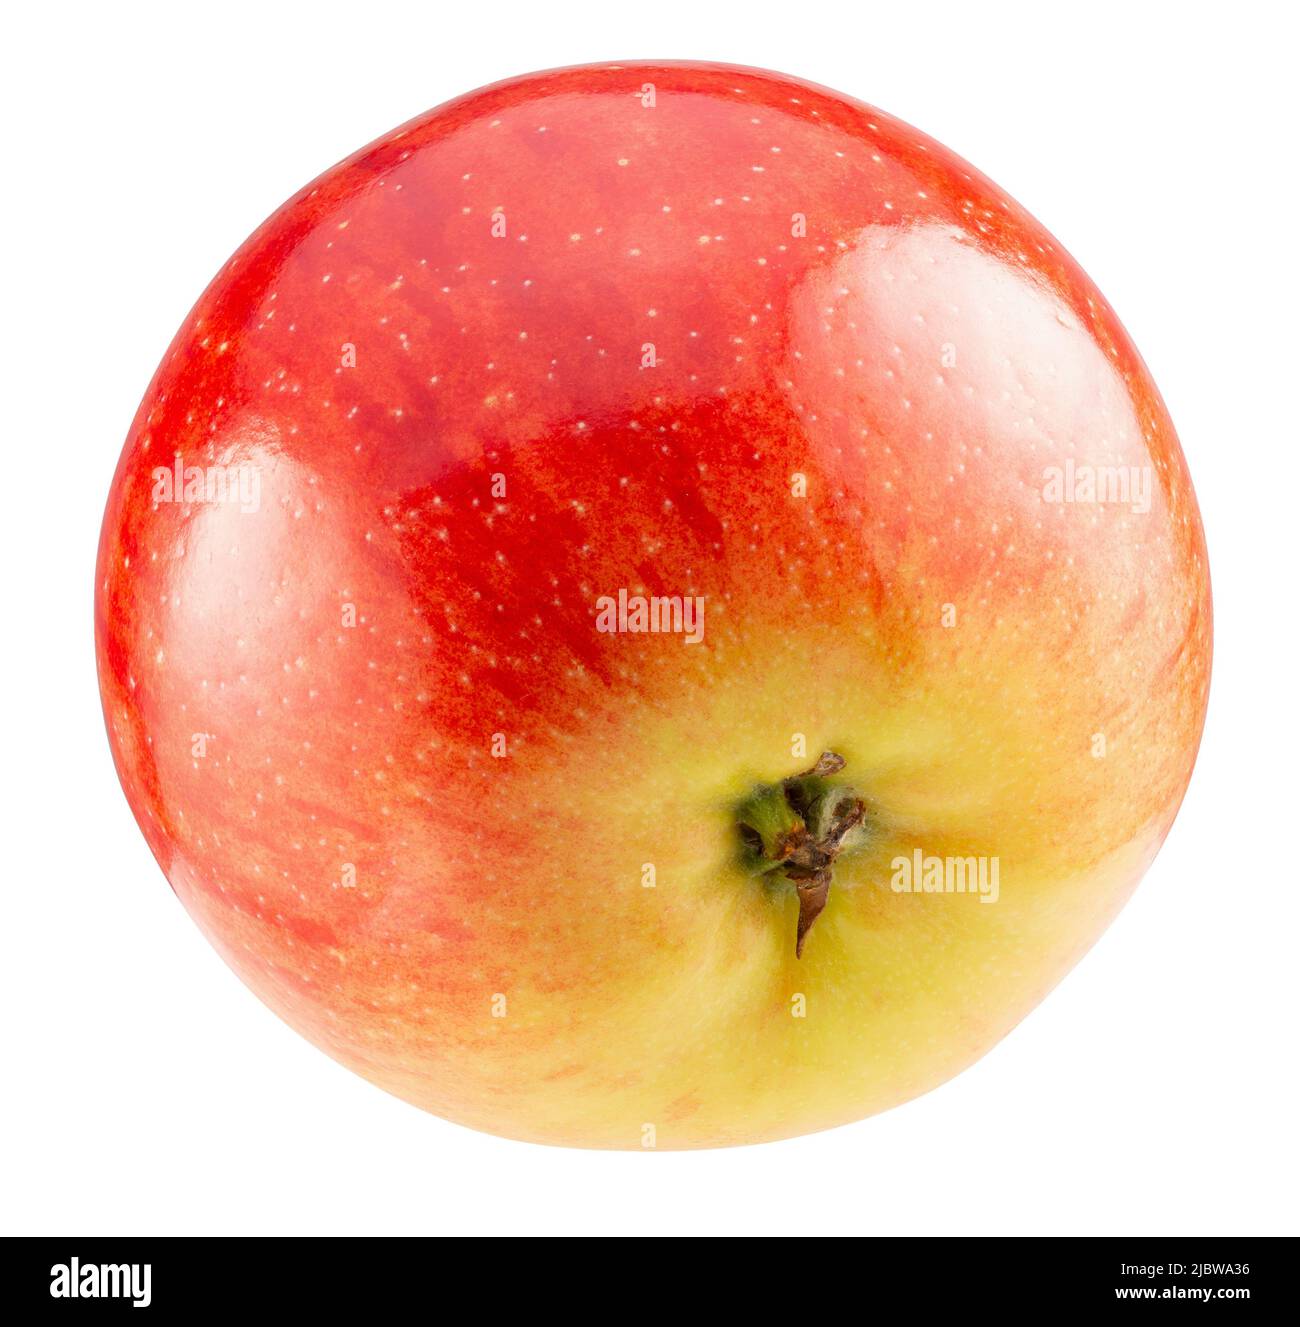 manzana roja con ruta de recorte aislada sobre un fondo blanco. Foto de stock